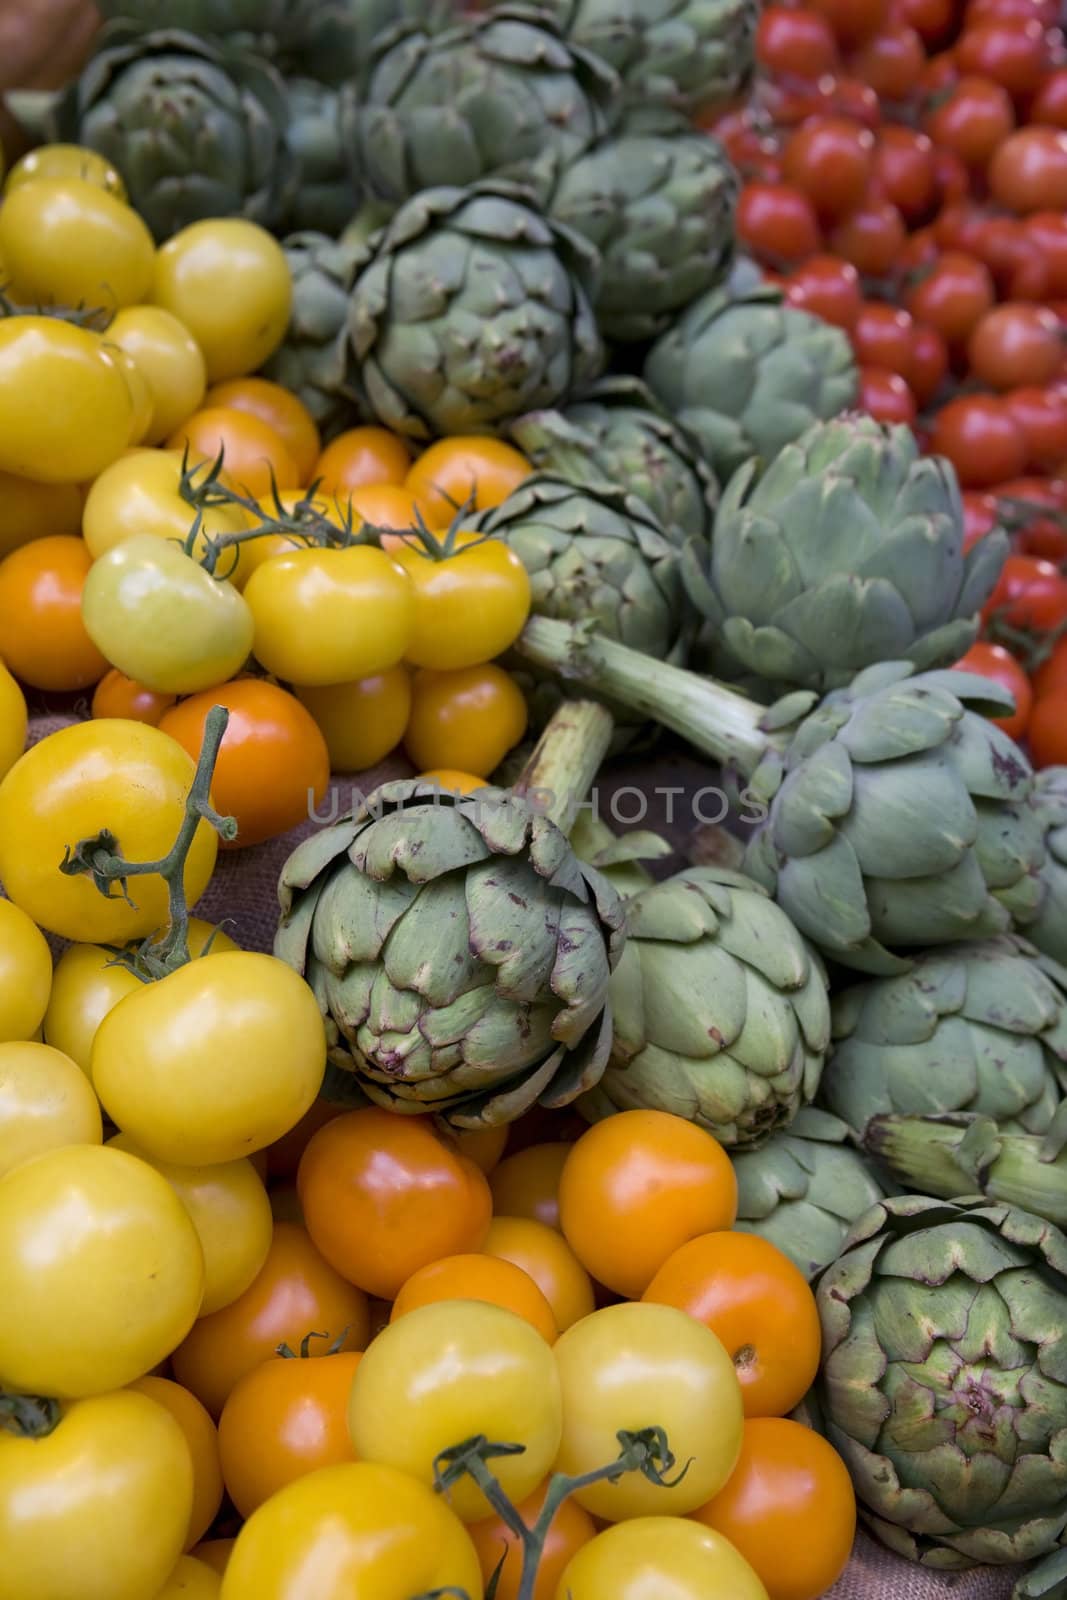 vegetables in grossery shop